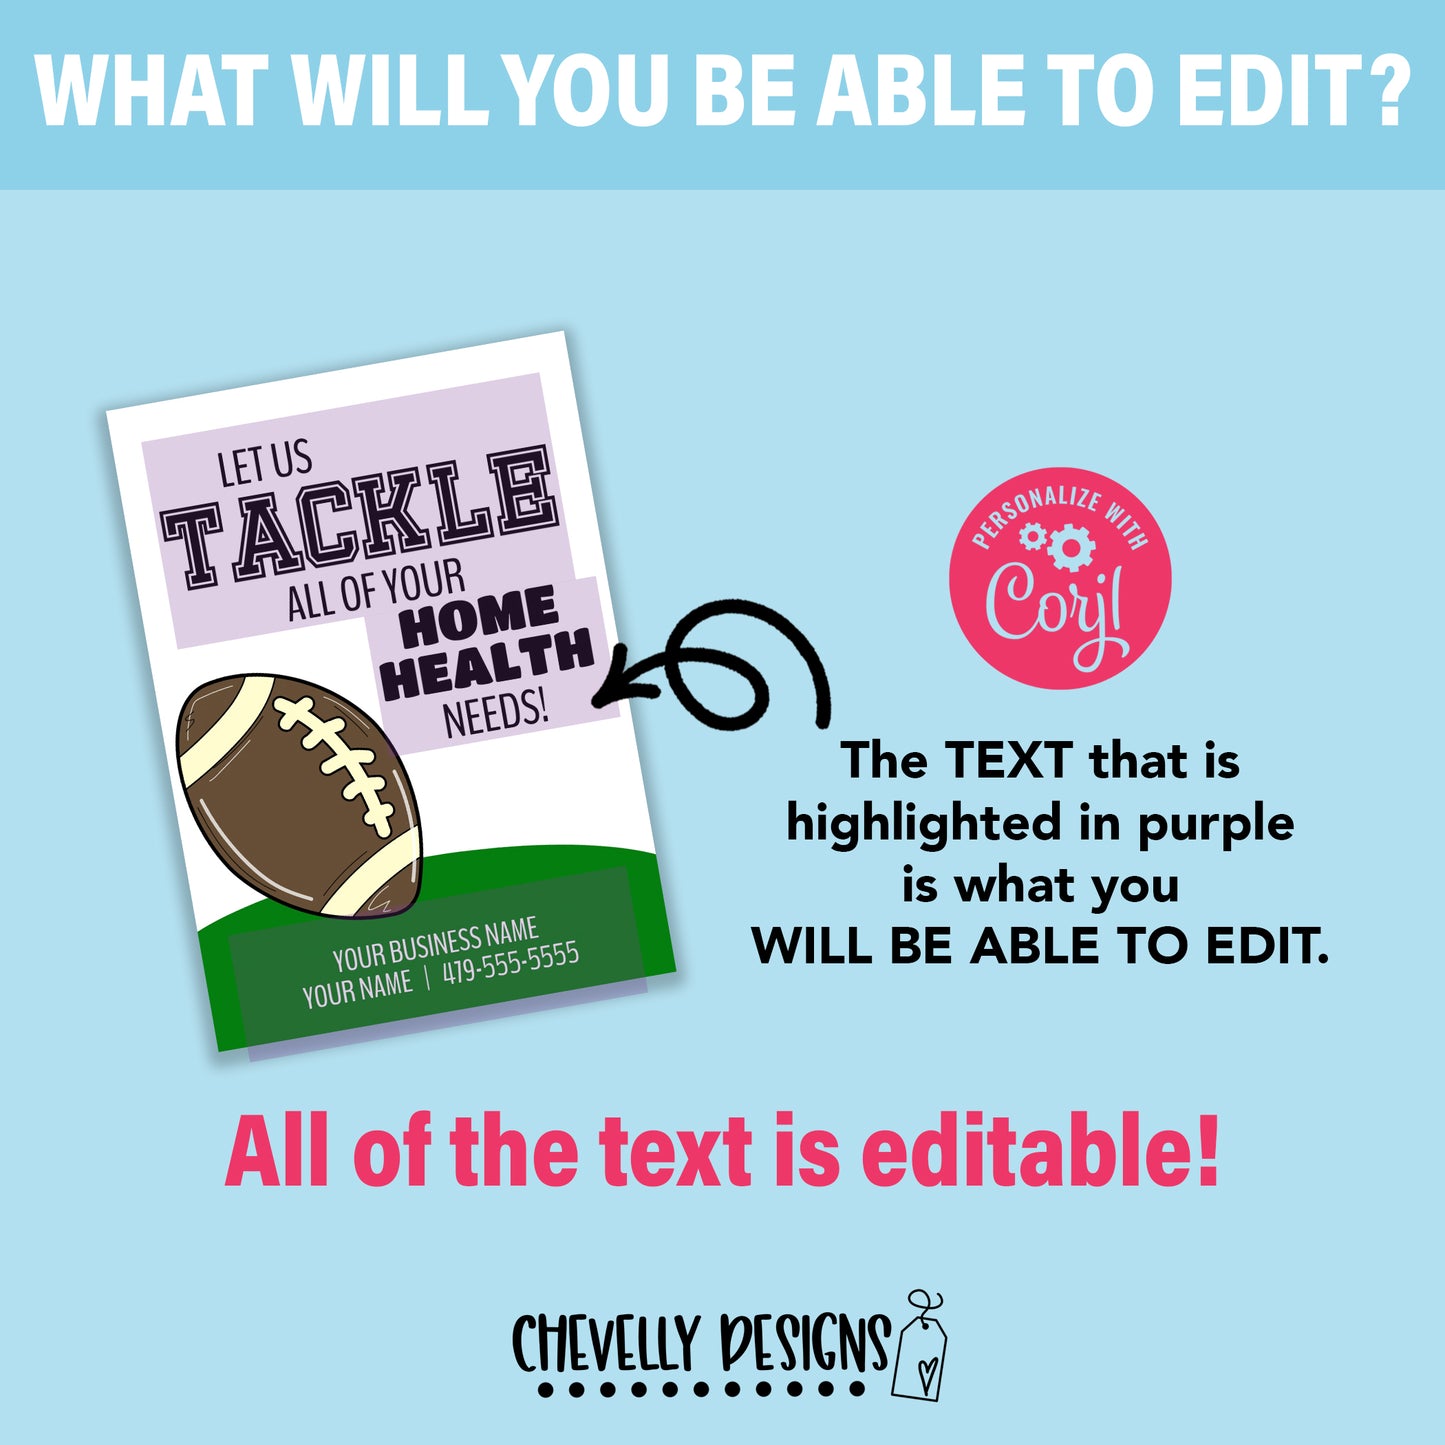 Editable - Let Us Tackle Your Needs - Printable Football Referral Gift Tags - Digital File